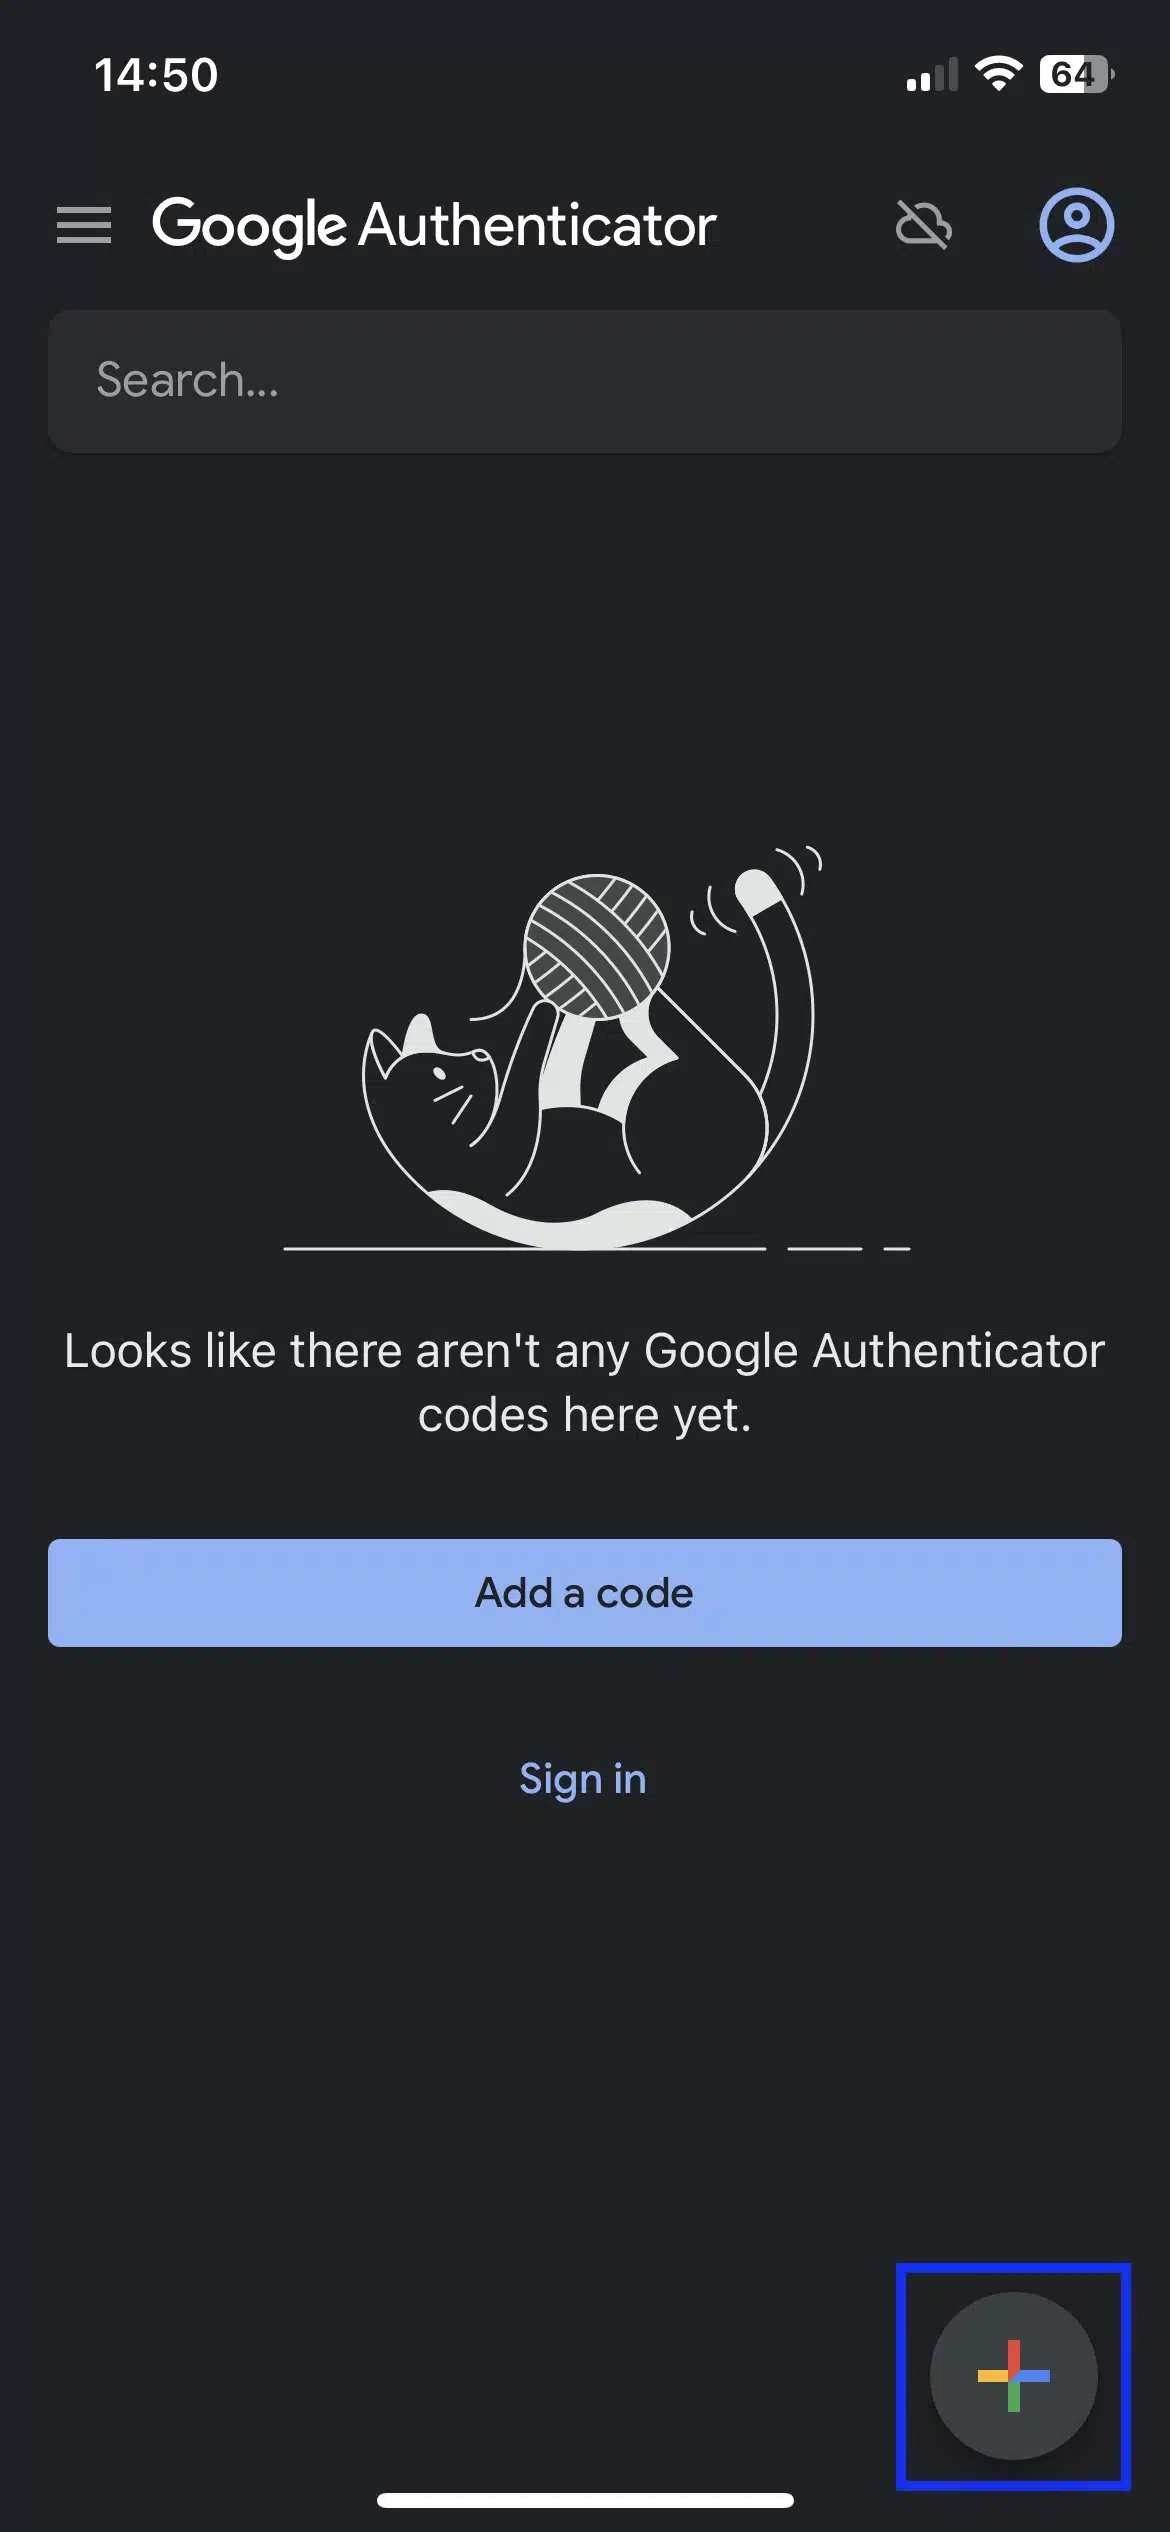 pfSense - CP - Google Authenticator - Add Code